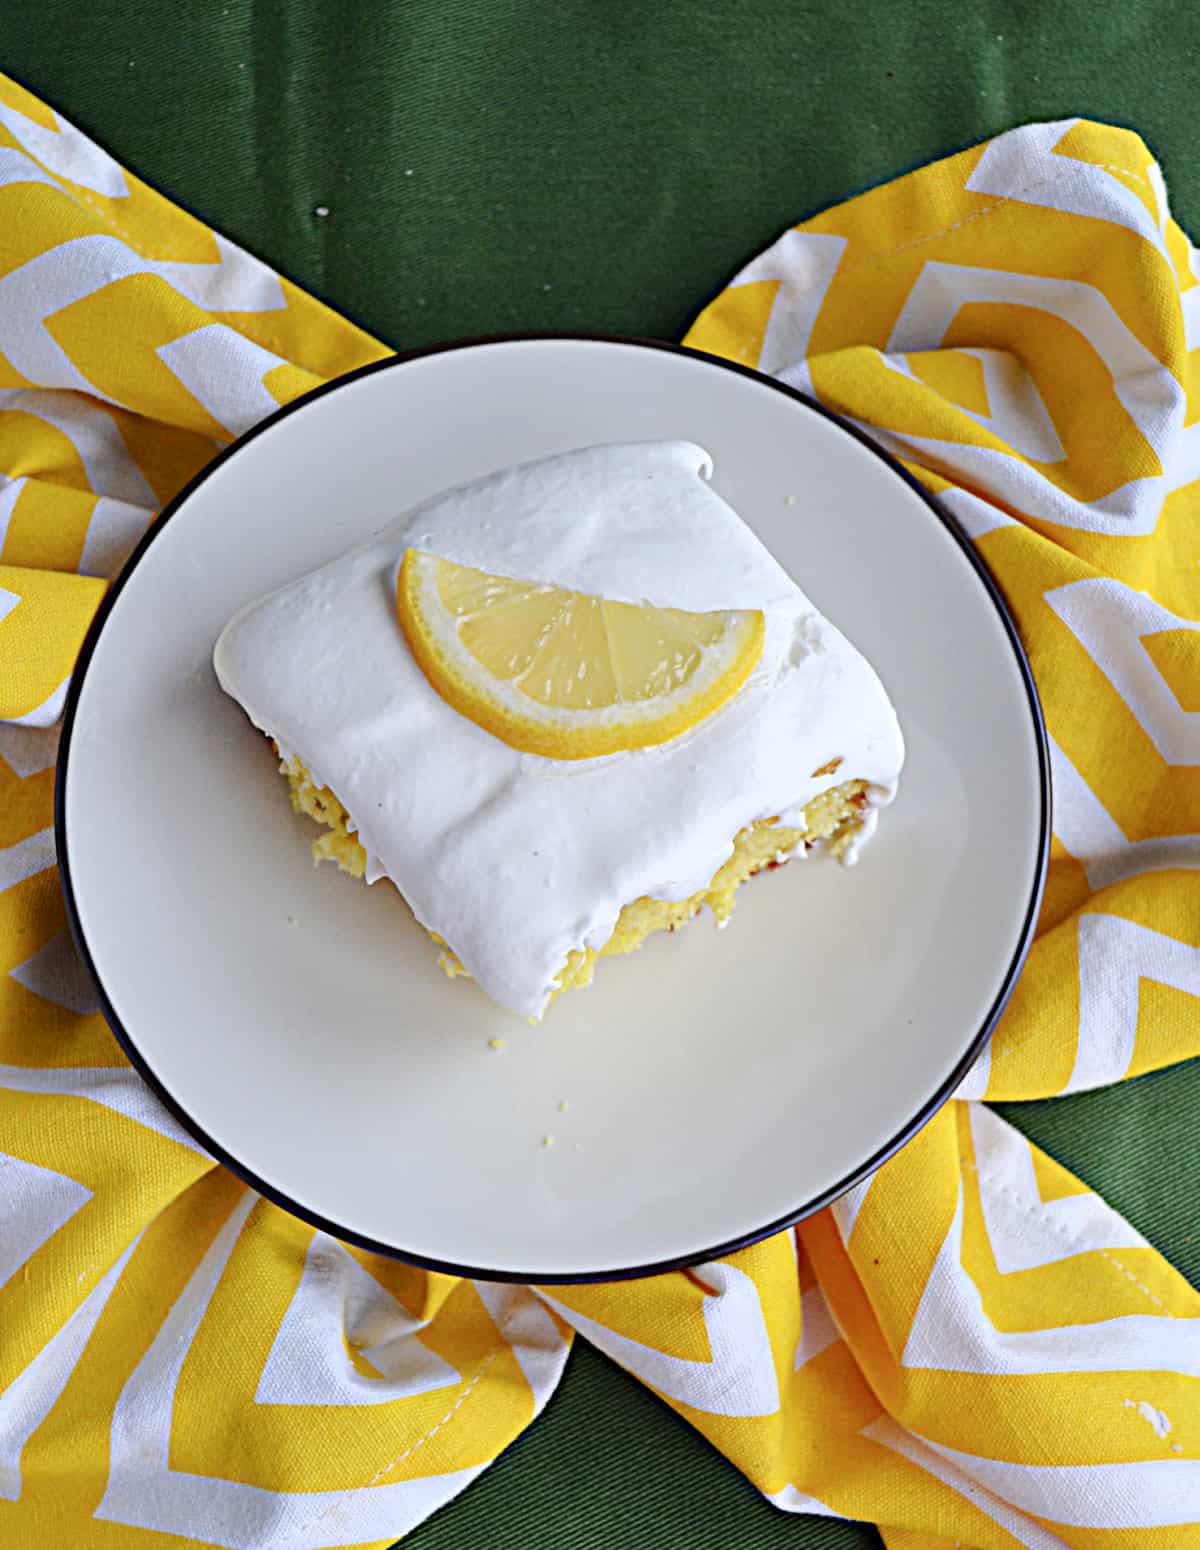 A slice of lemon cake on a plate with a lemon wedge on top.